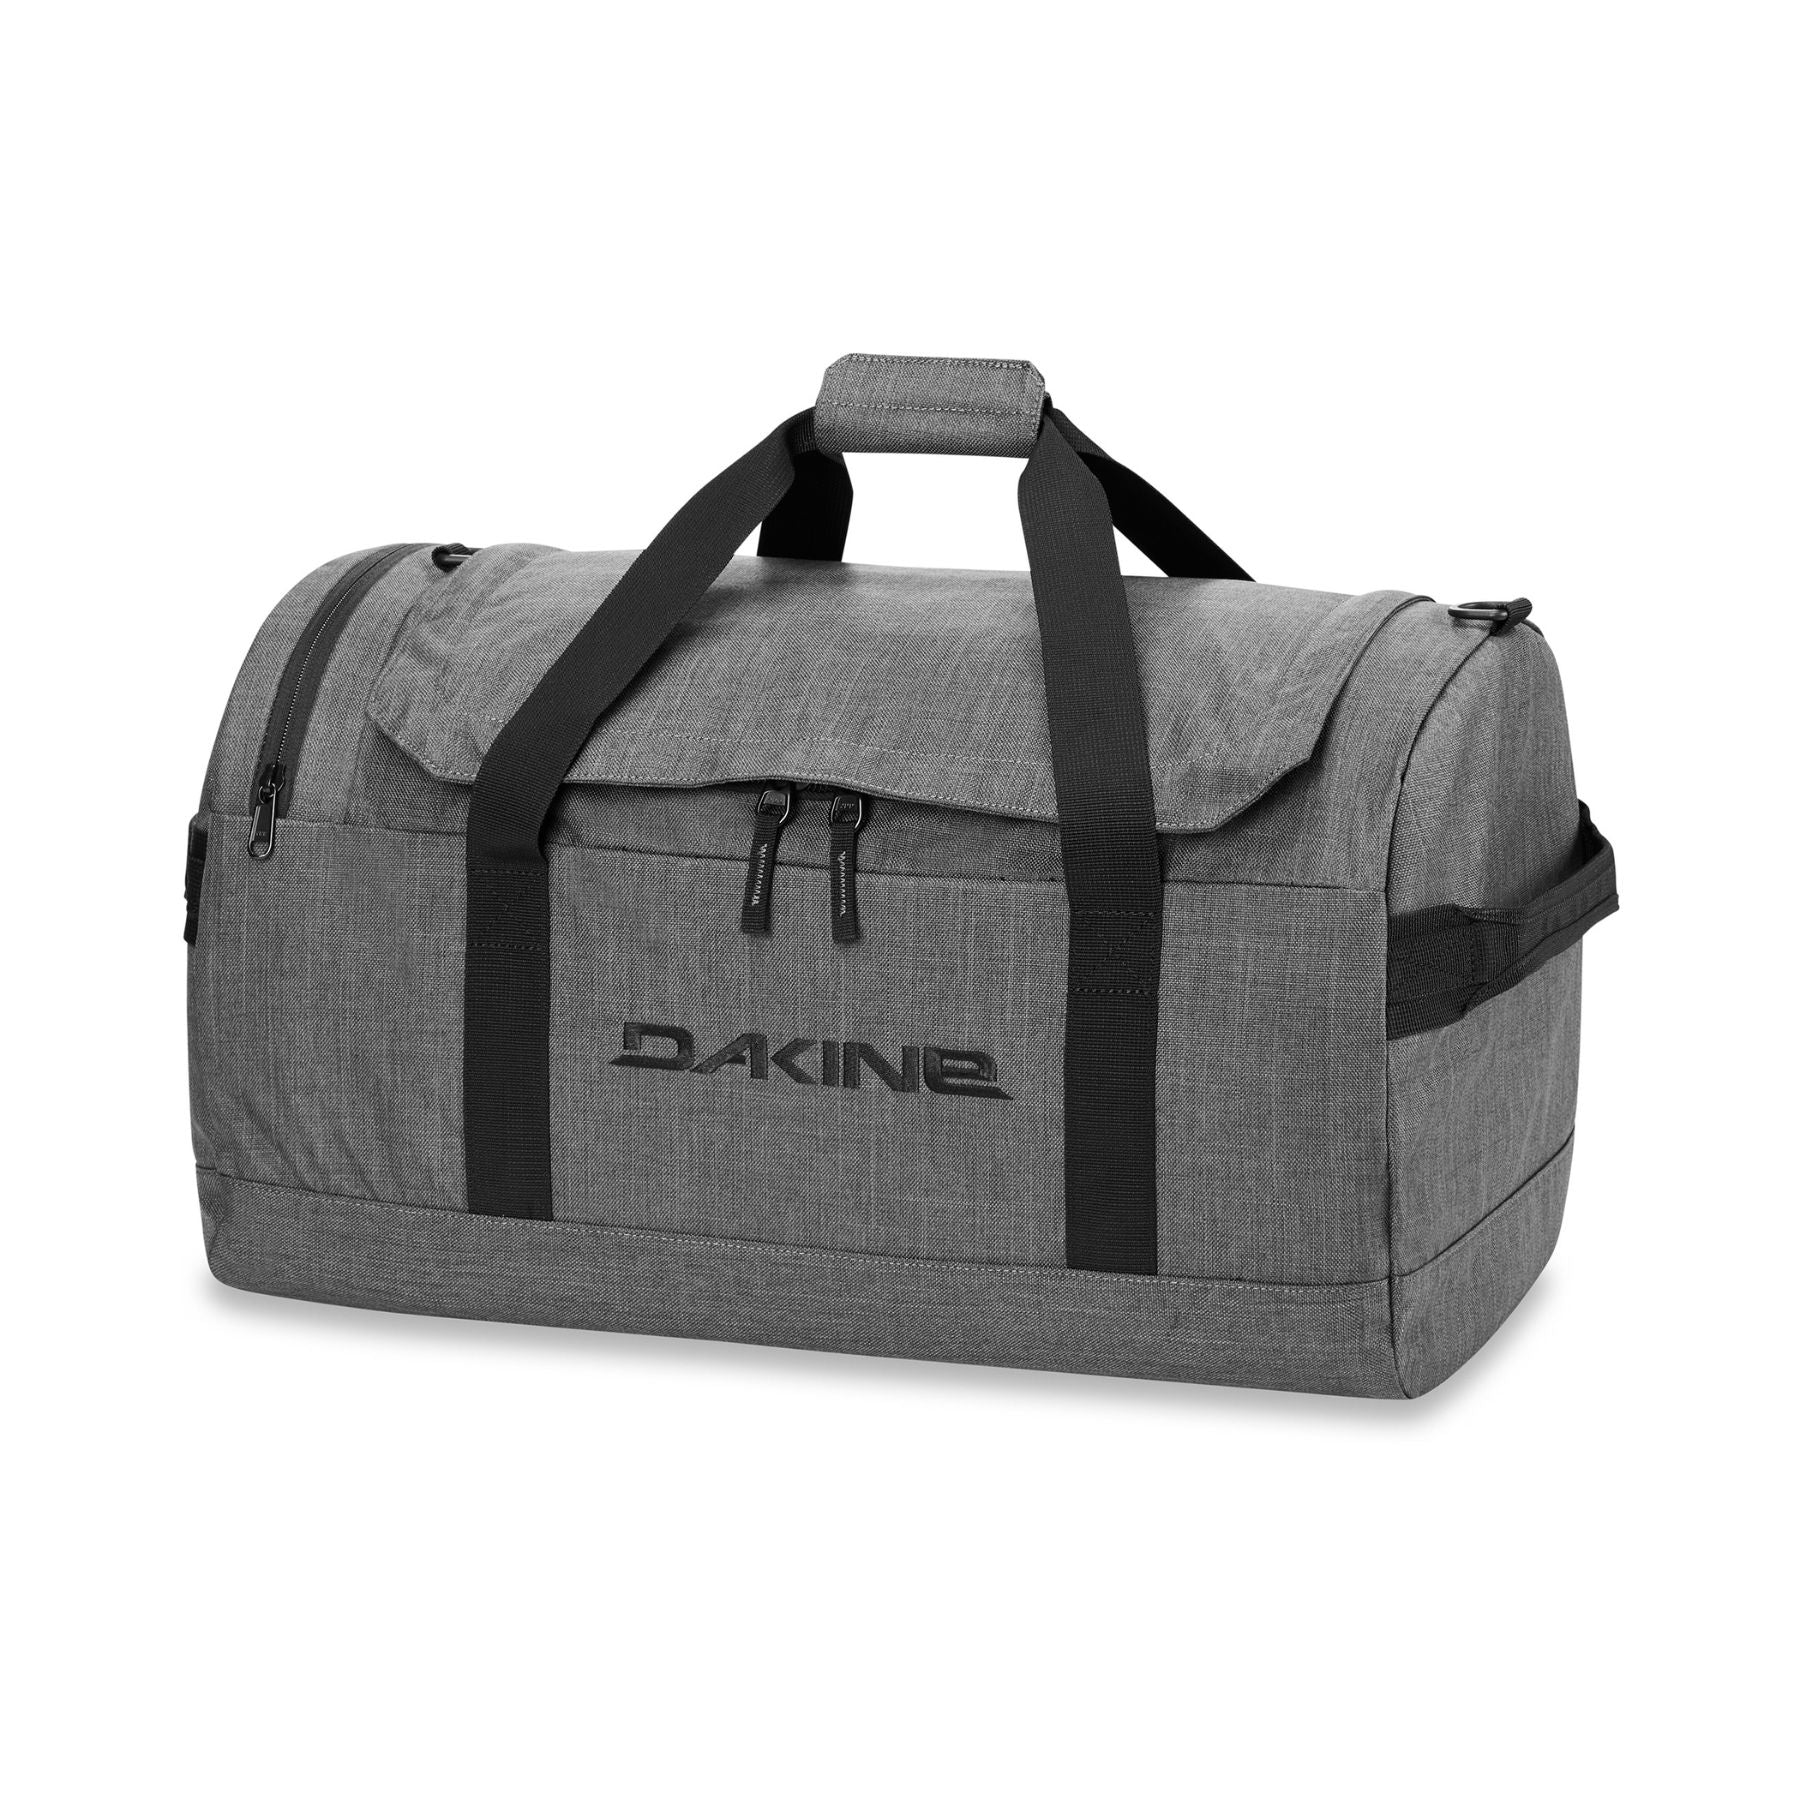 Dakine EQ Duffle 50L Bag in Carbon